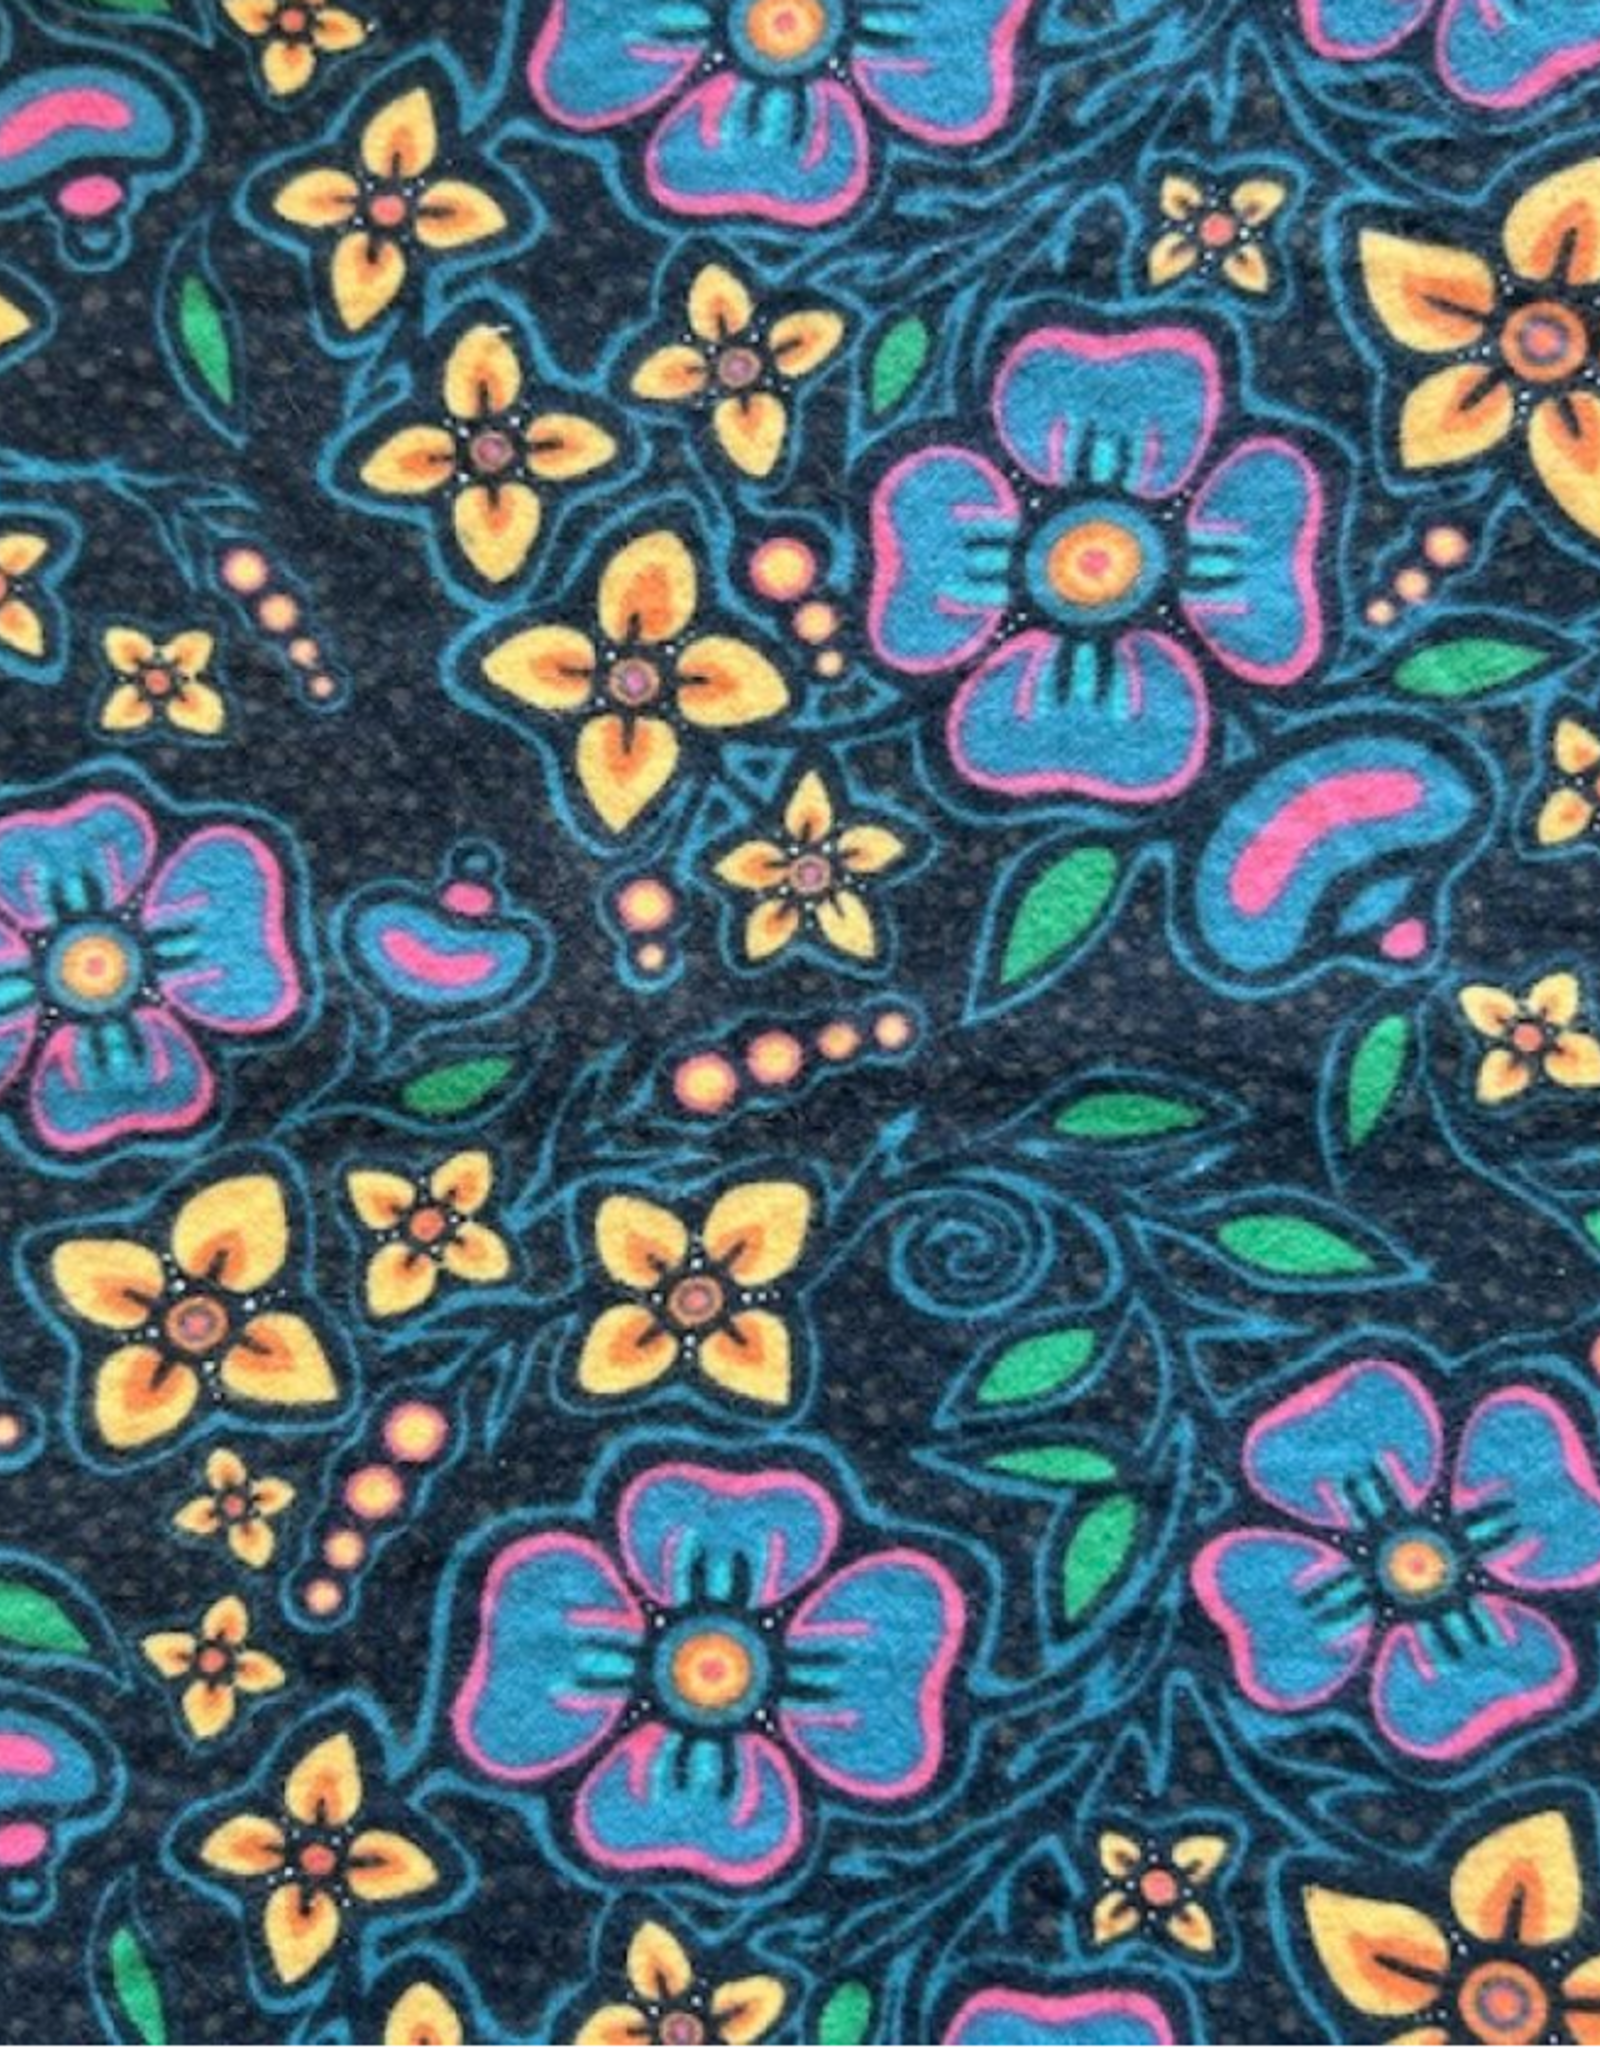 Ojibway Florals Flannel by Jackie Traverse  Black